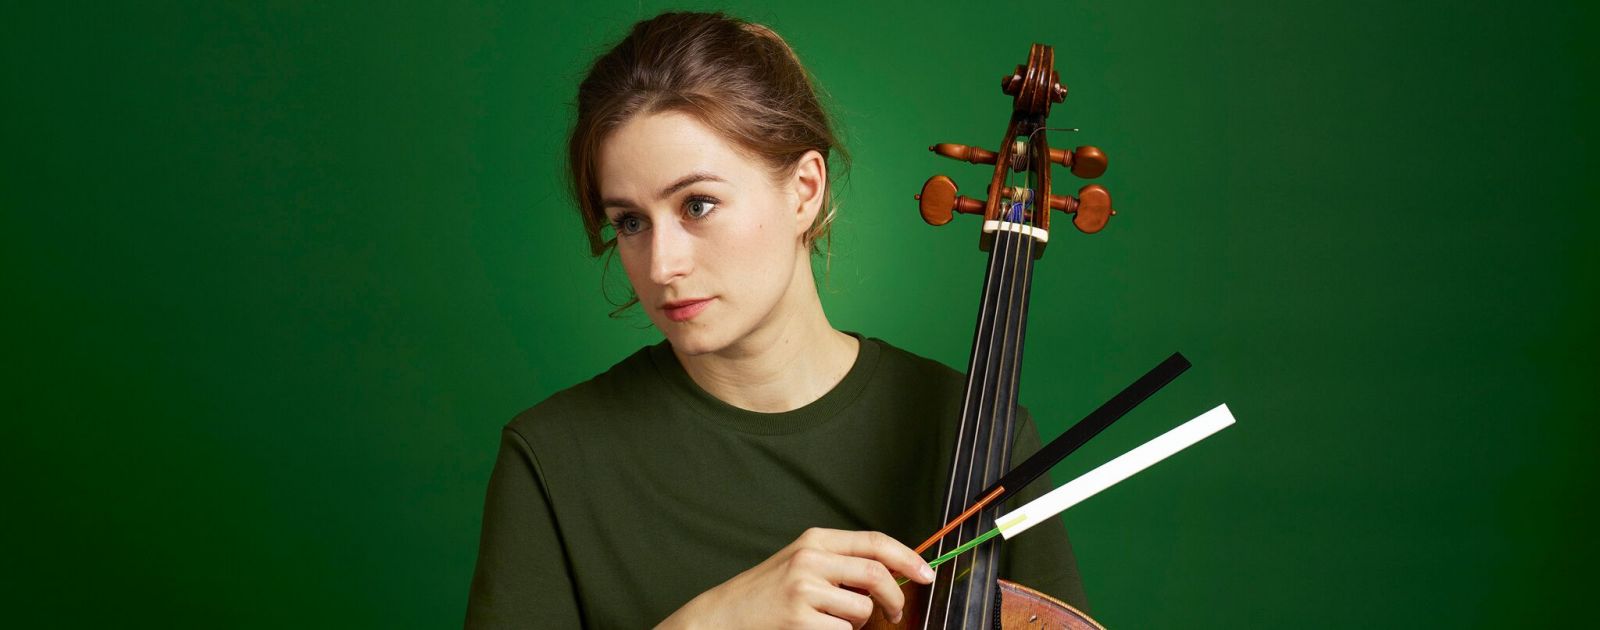 Luise Buchberger cello